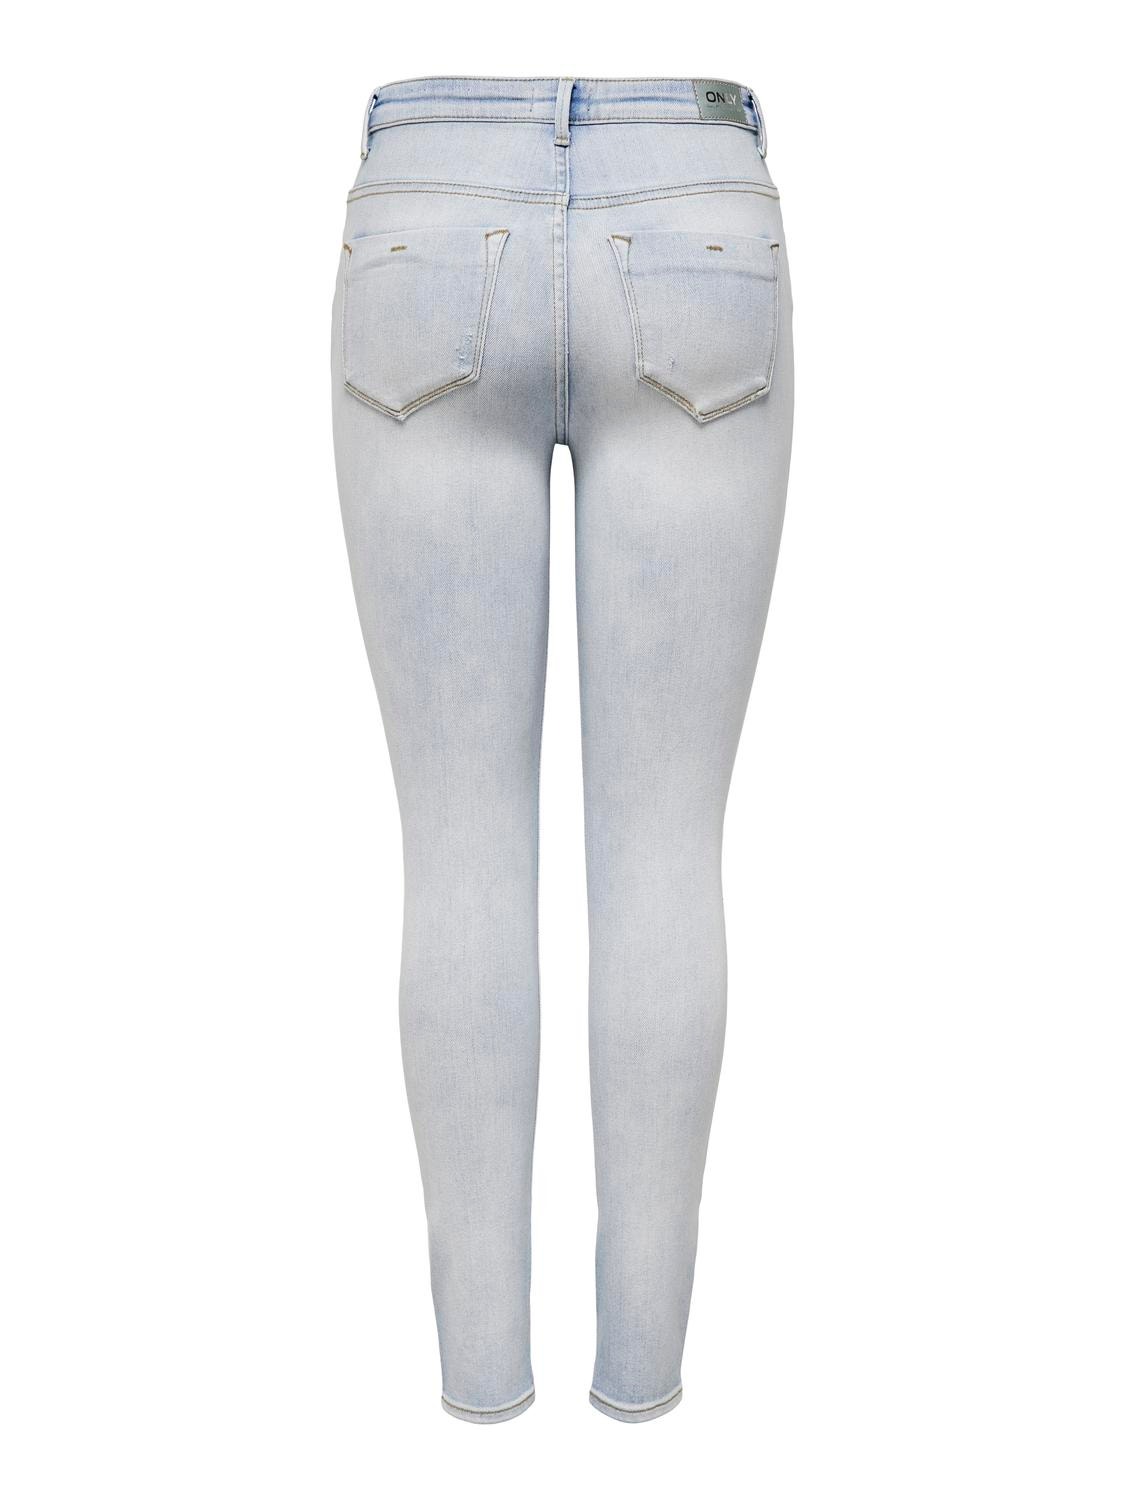 ONLY Jeans Skinny Fit Taille haute Ourlé destroy -Light Blue Bleached Denim - 15246999